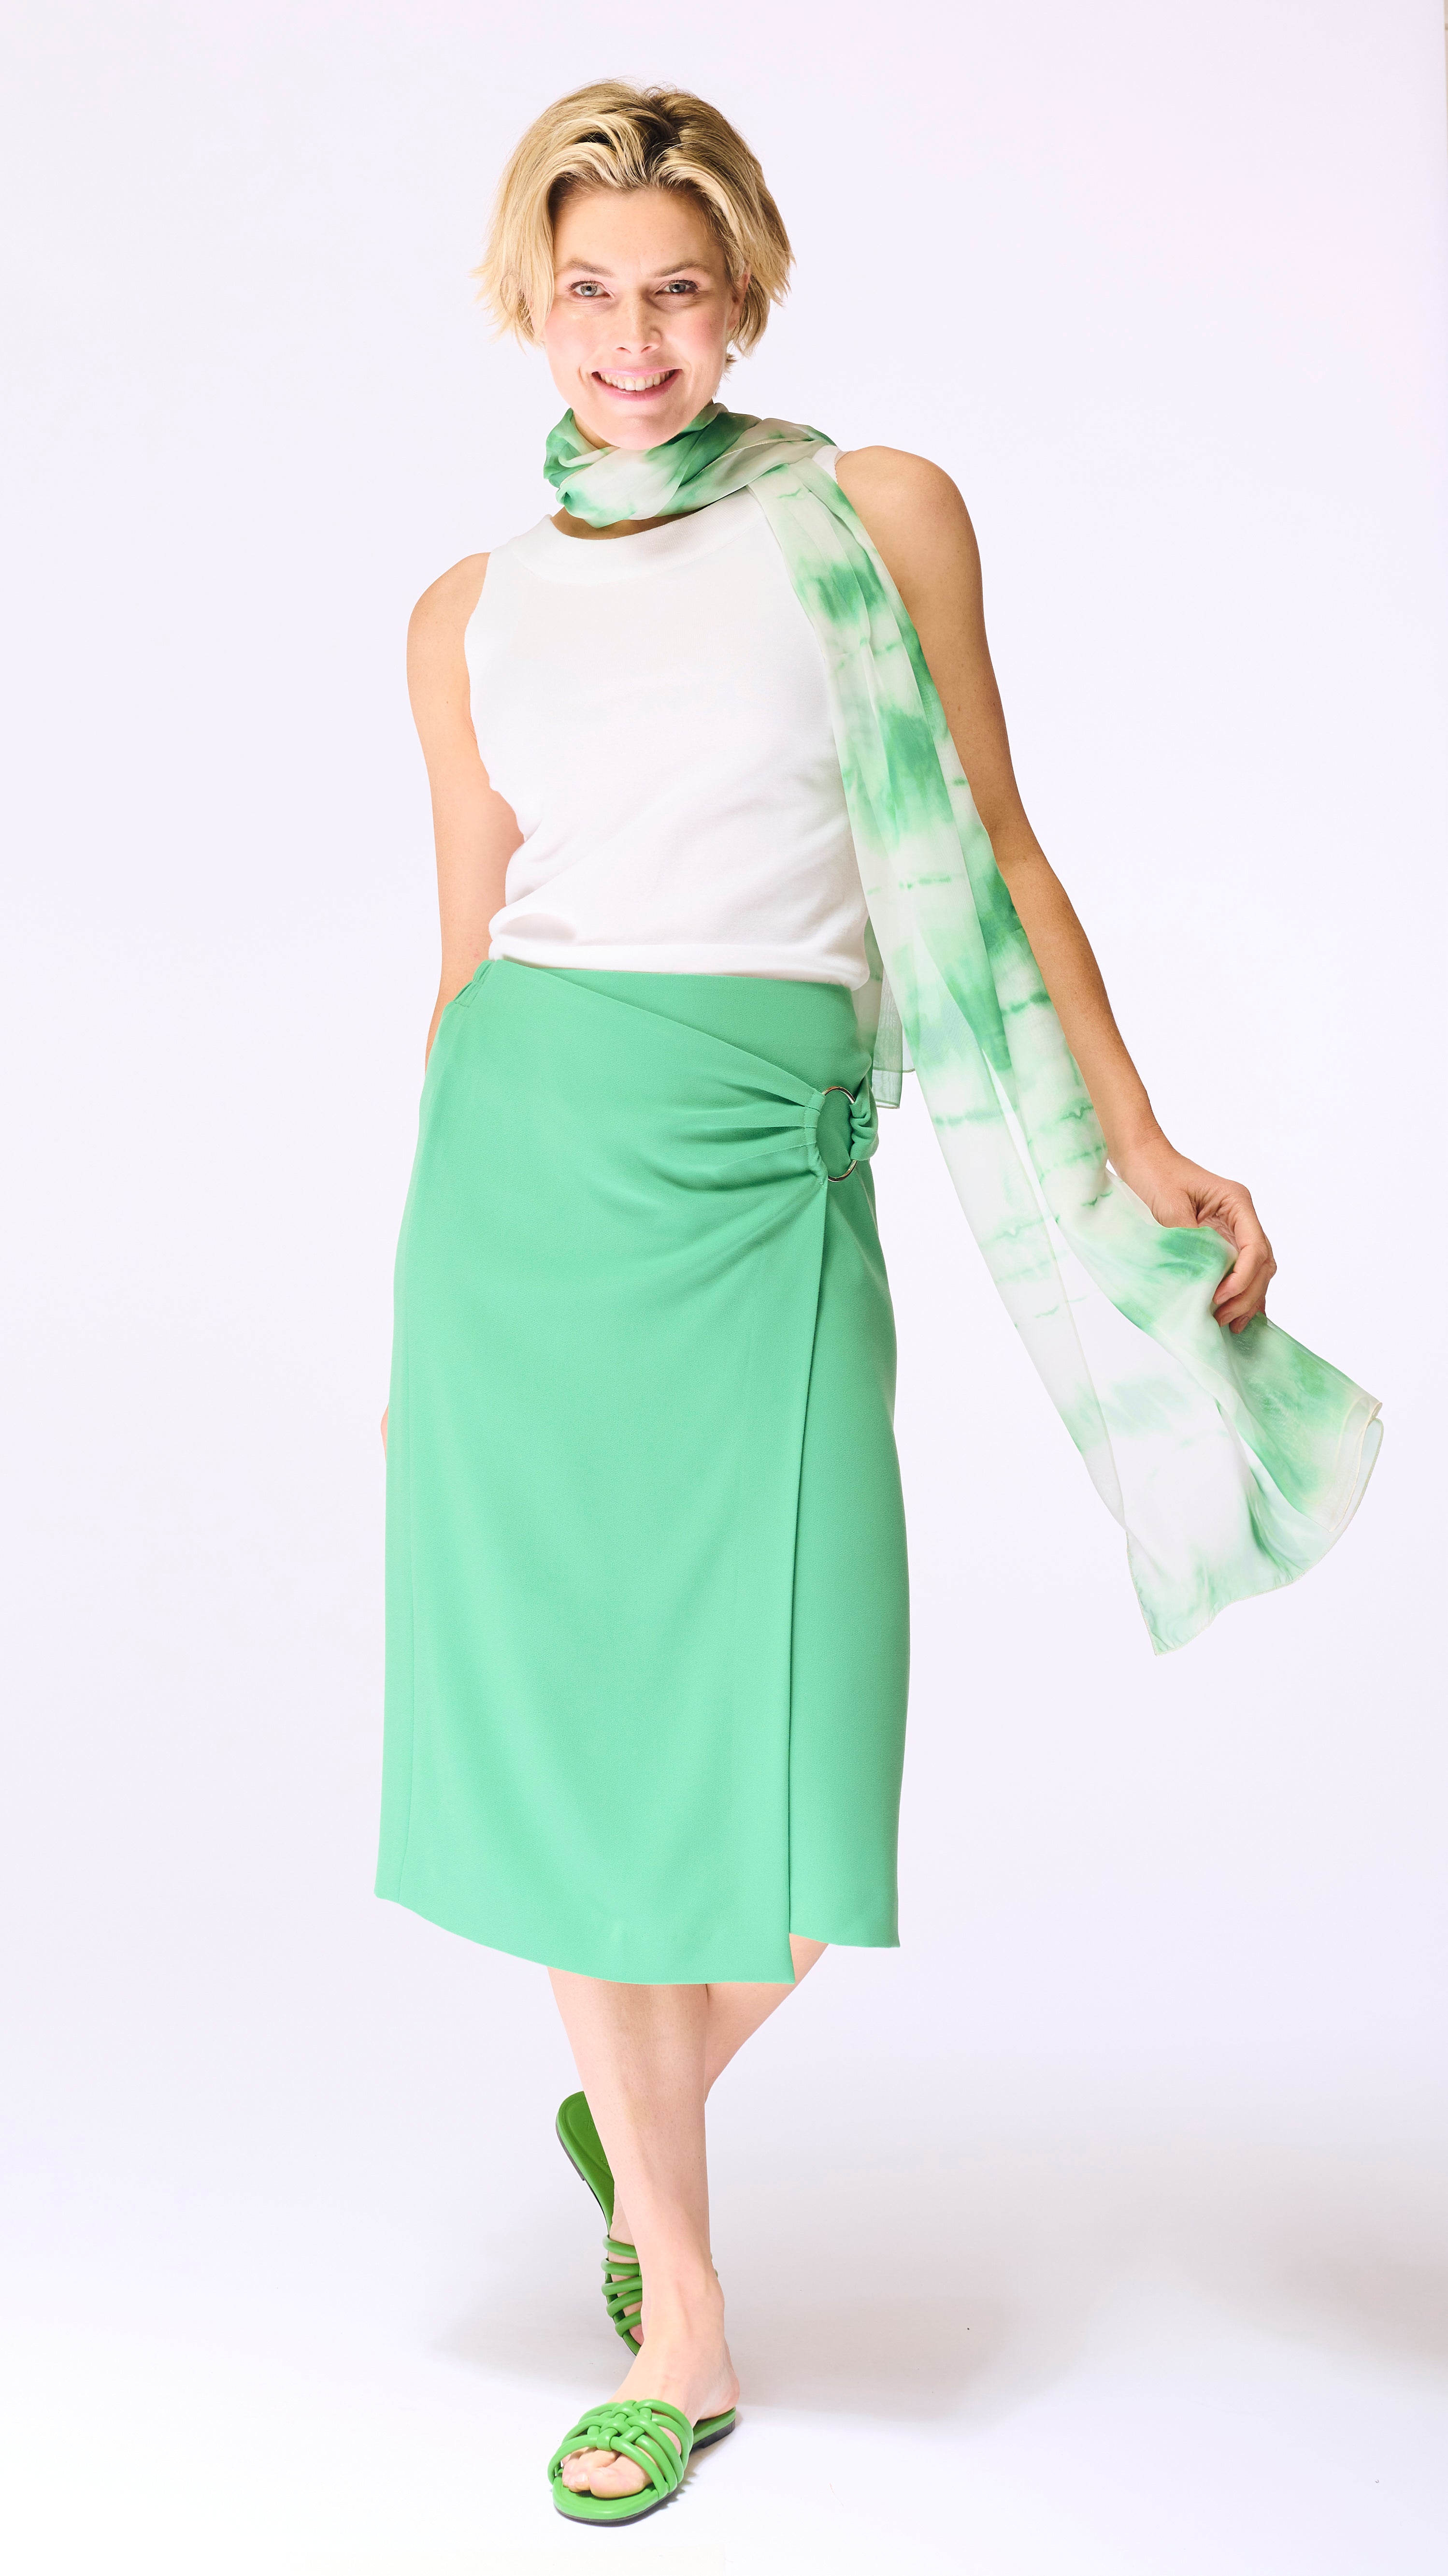 Jupe Green Accent Fashion (Marque 4725/Printemps)